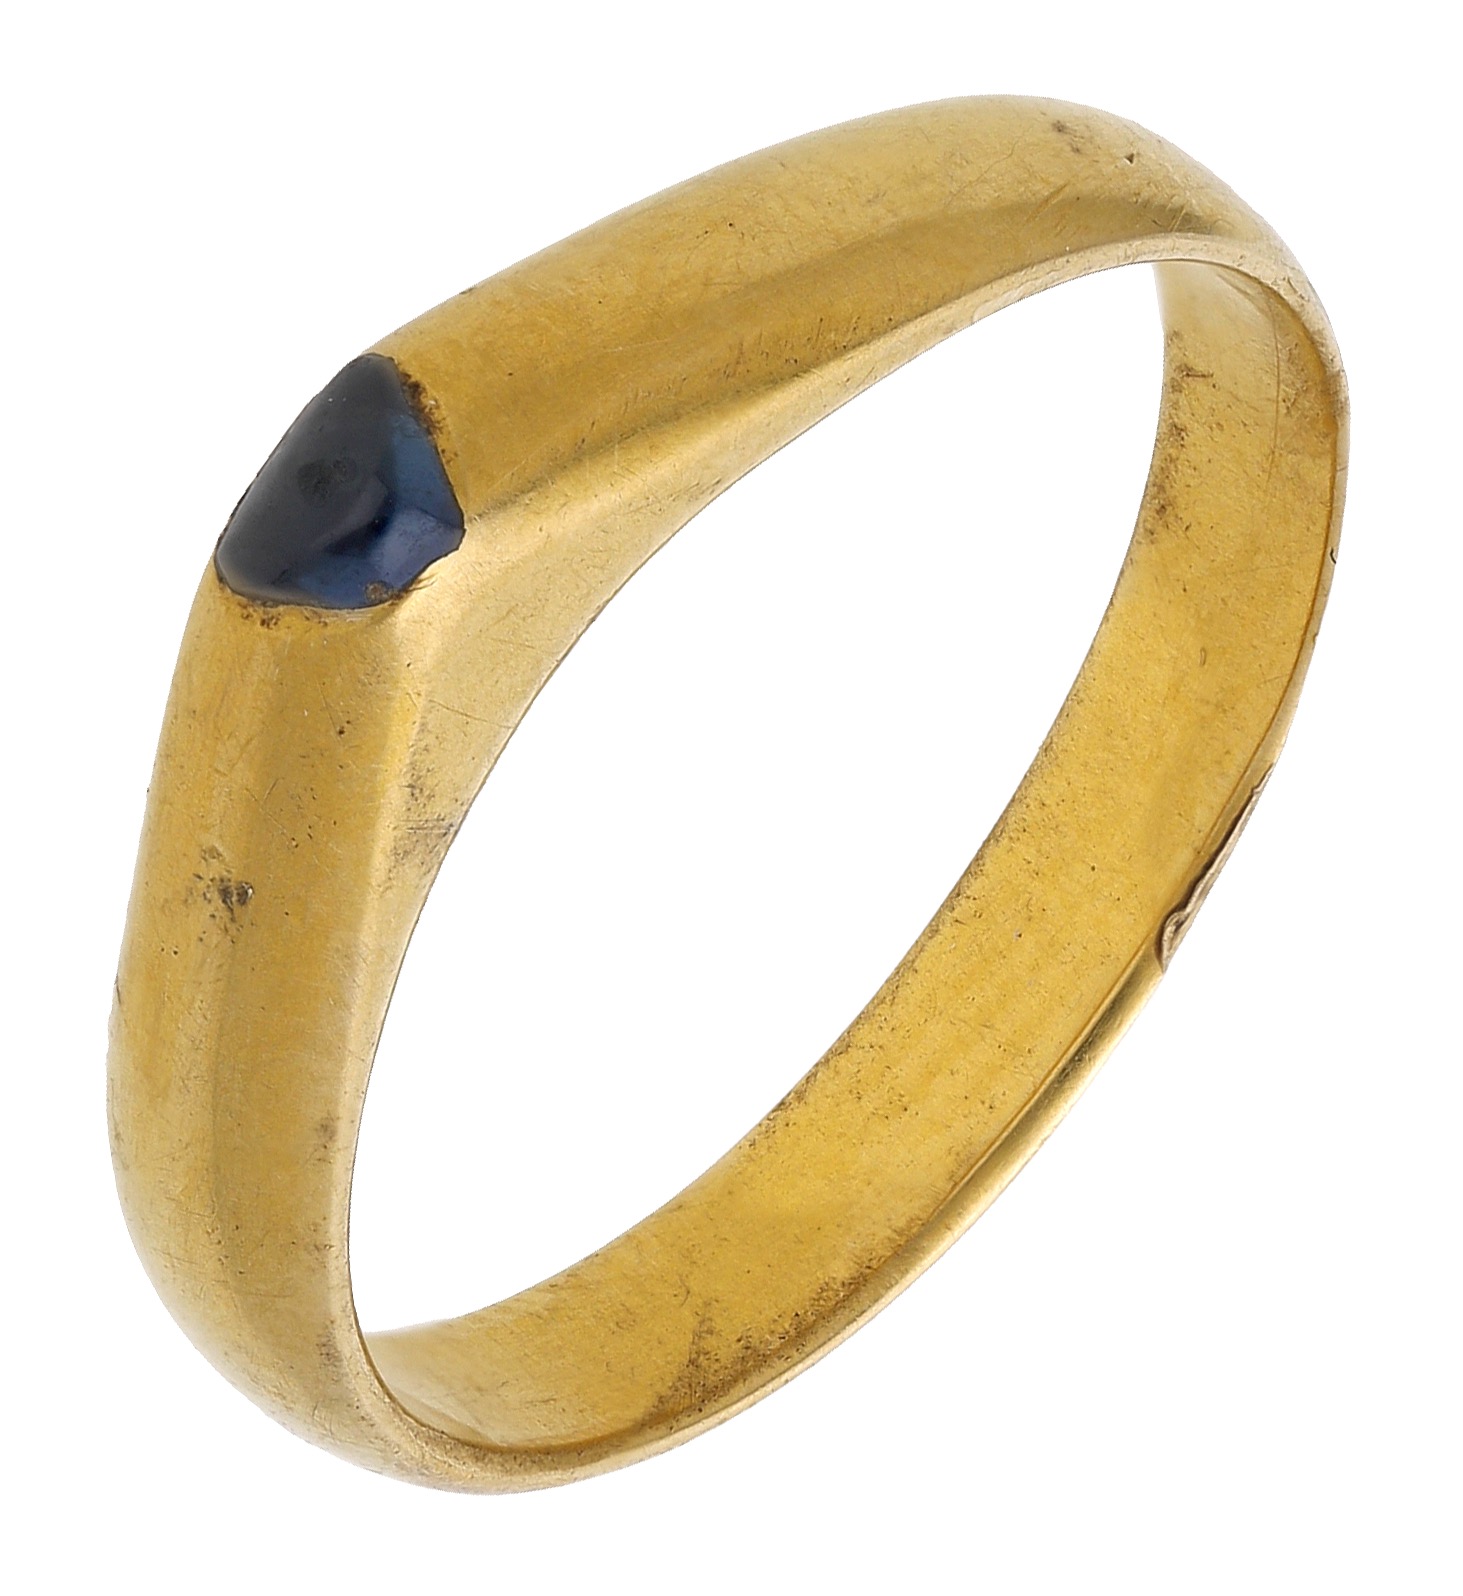 Medieval Swordsman's Ring